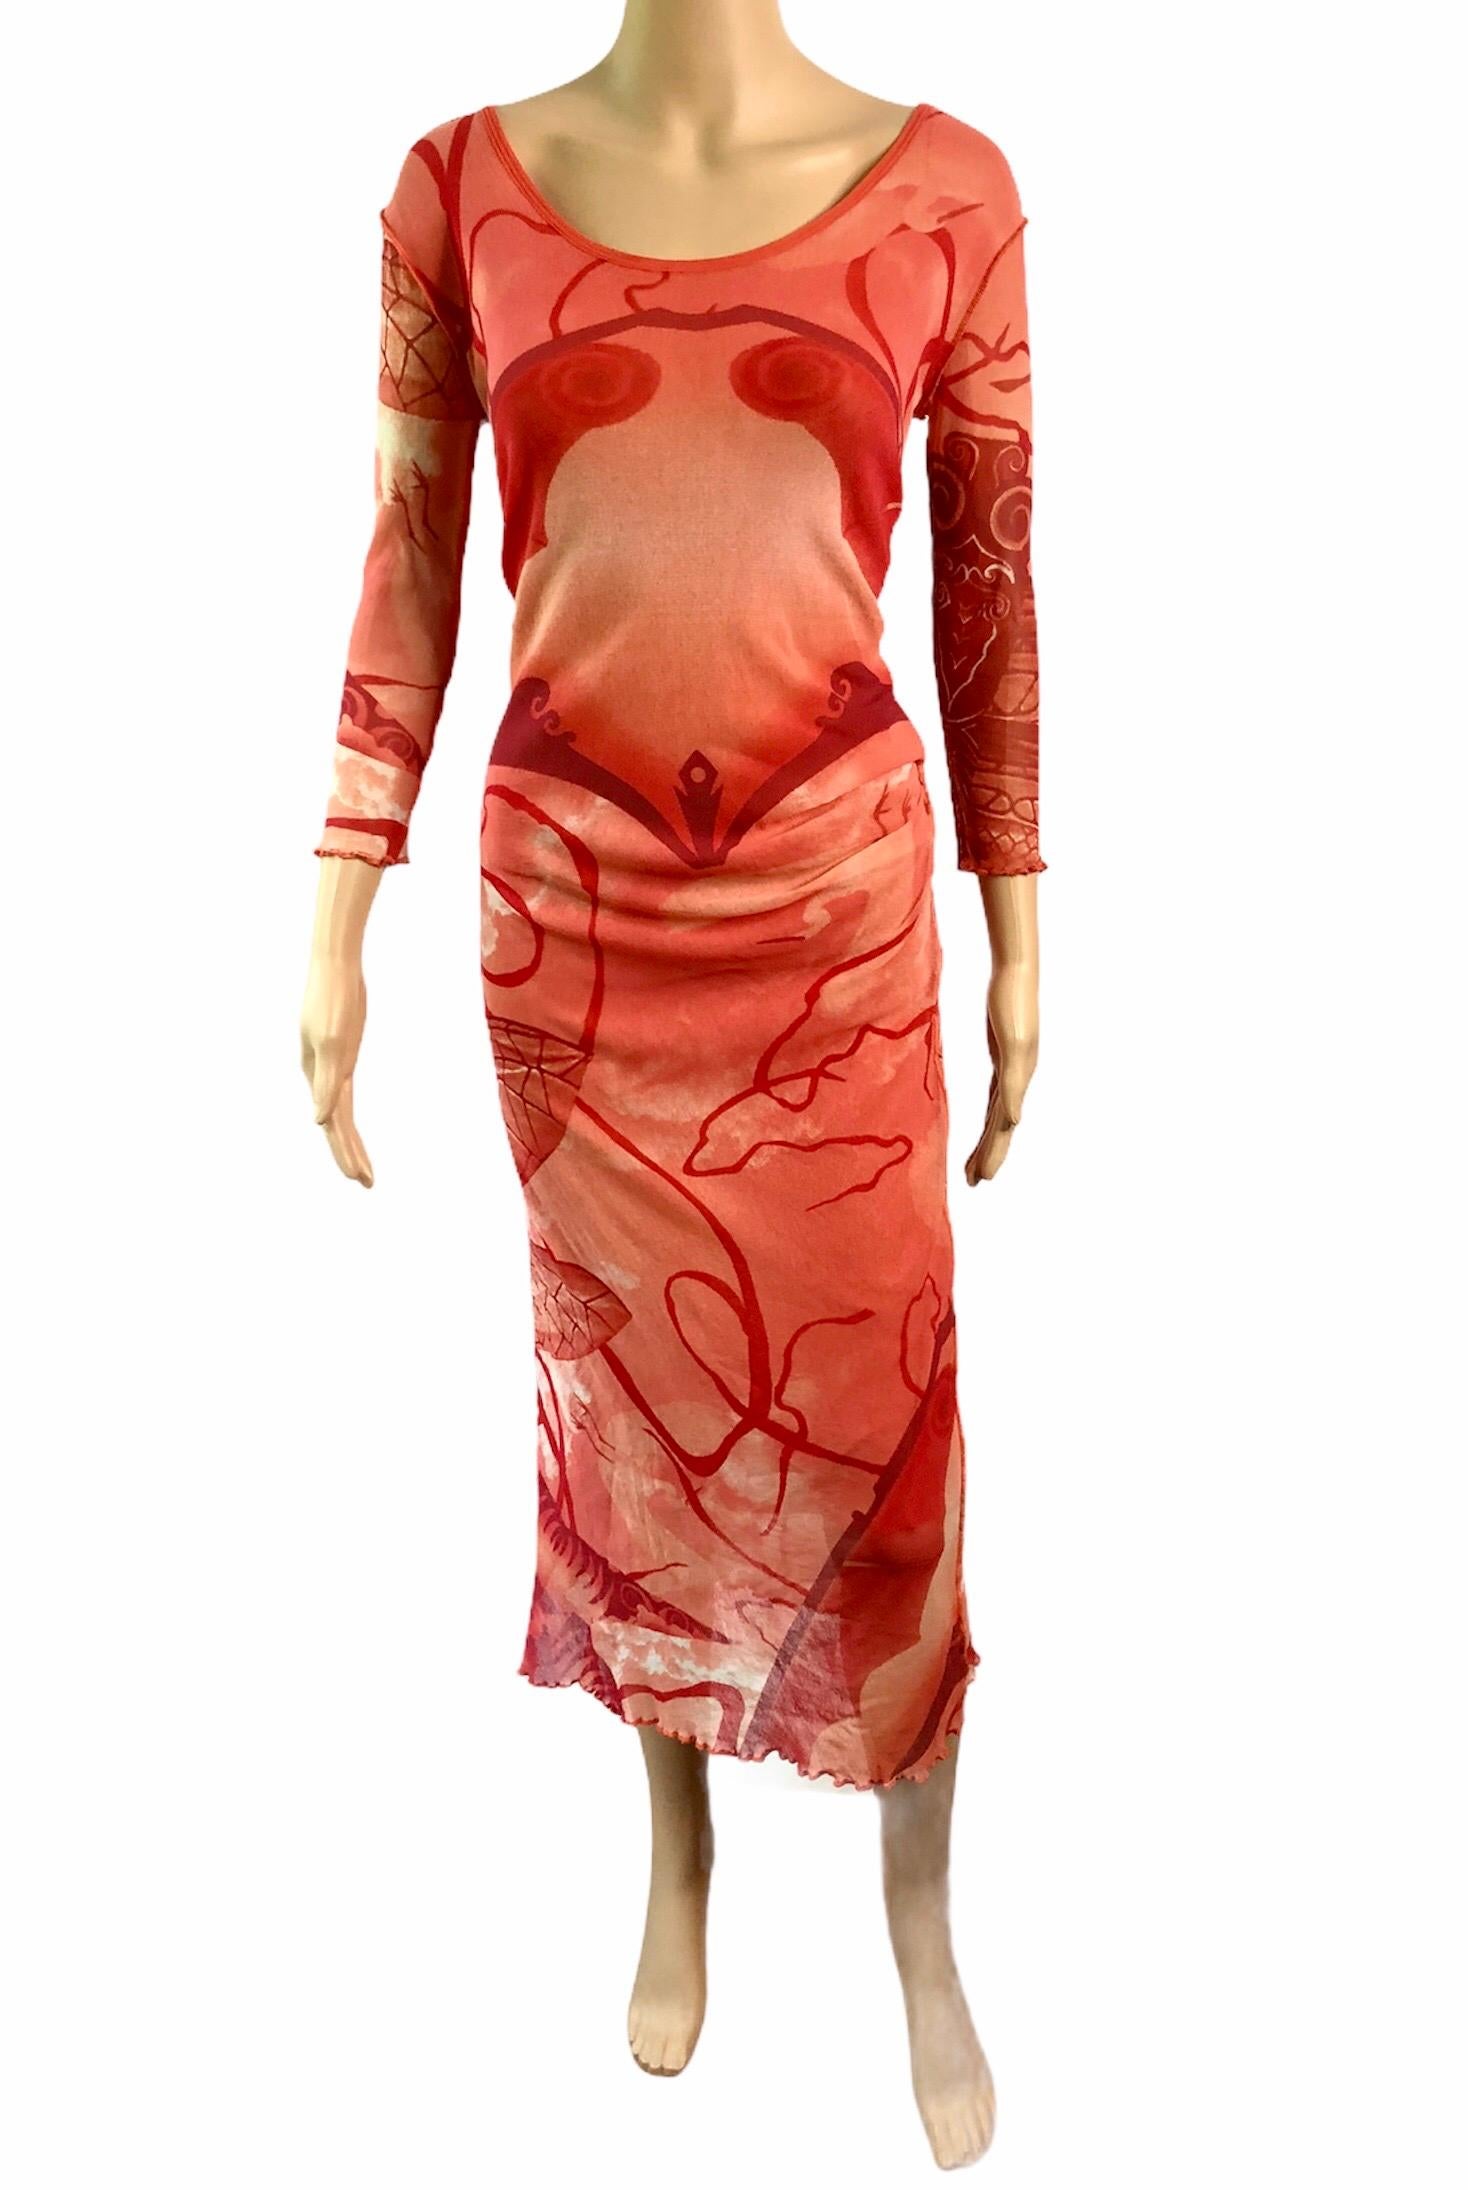 Jean Paul Gaultier S/S 2005 Semi-Sheer Mesh Abstract Salvador Dali Print Midi Dress Size S

